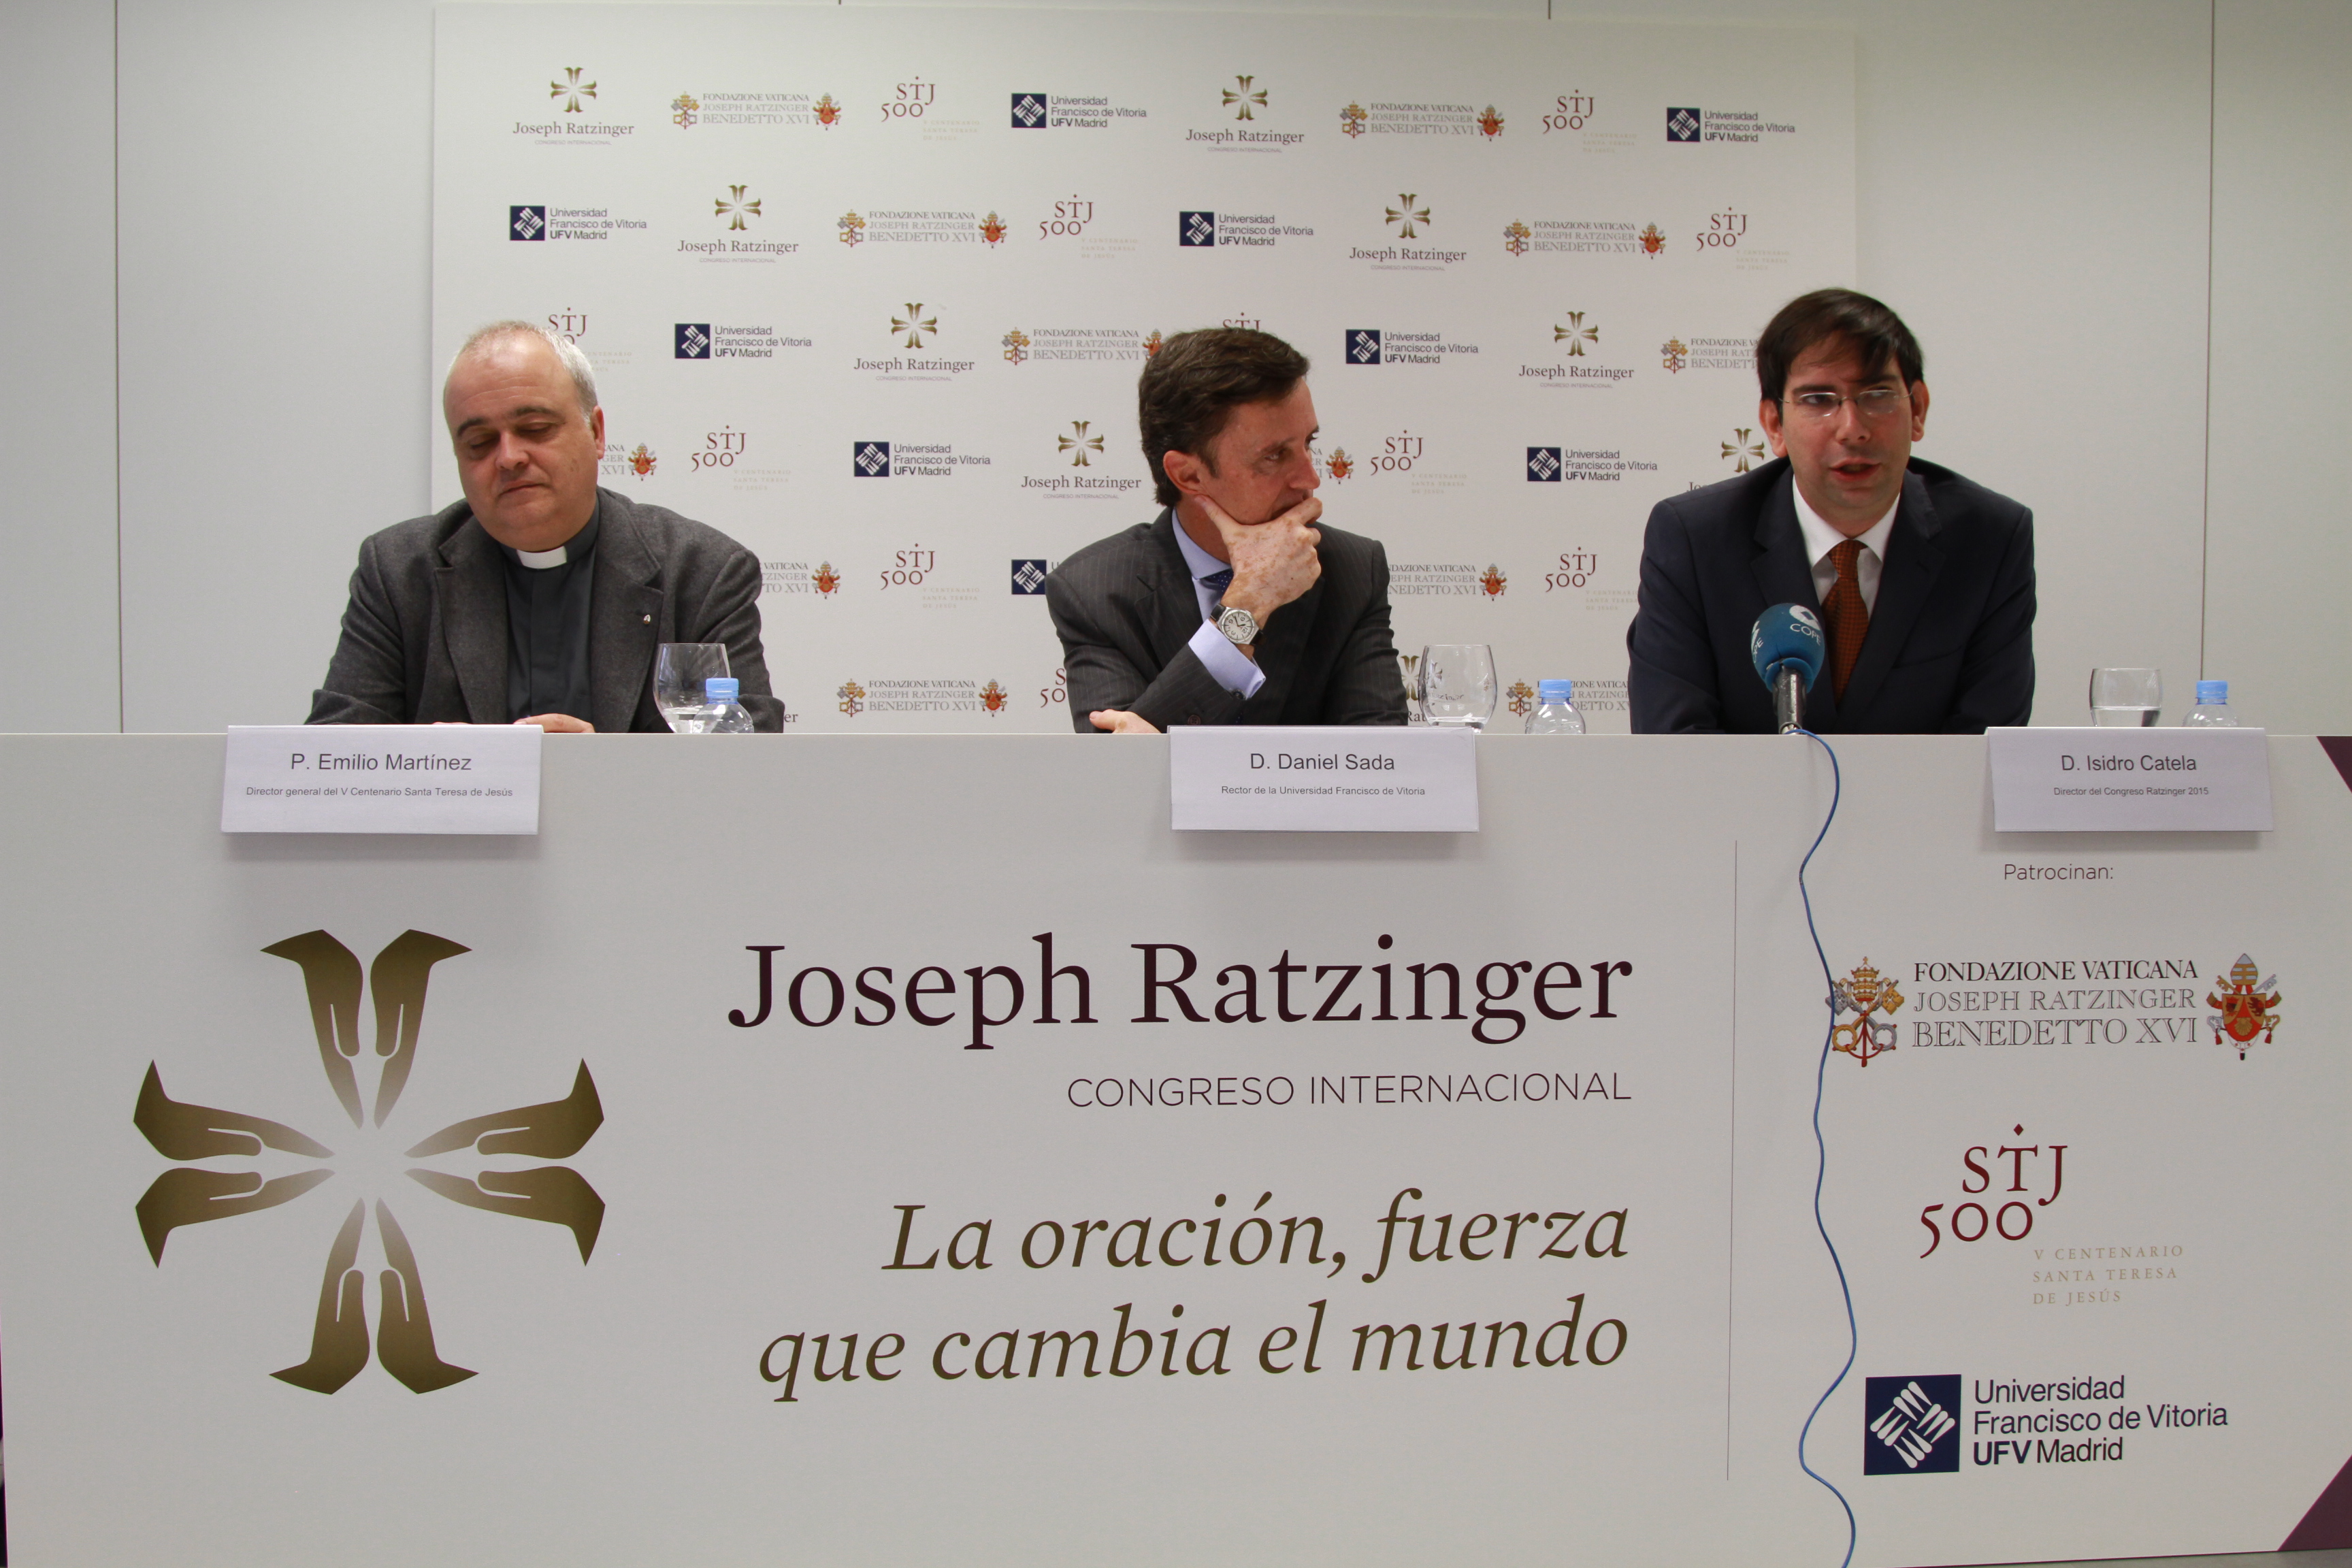 The Fifth International Congress organized by the Joseph Ratzinger – Benedict XVI Vatican Foundation